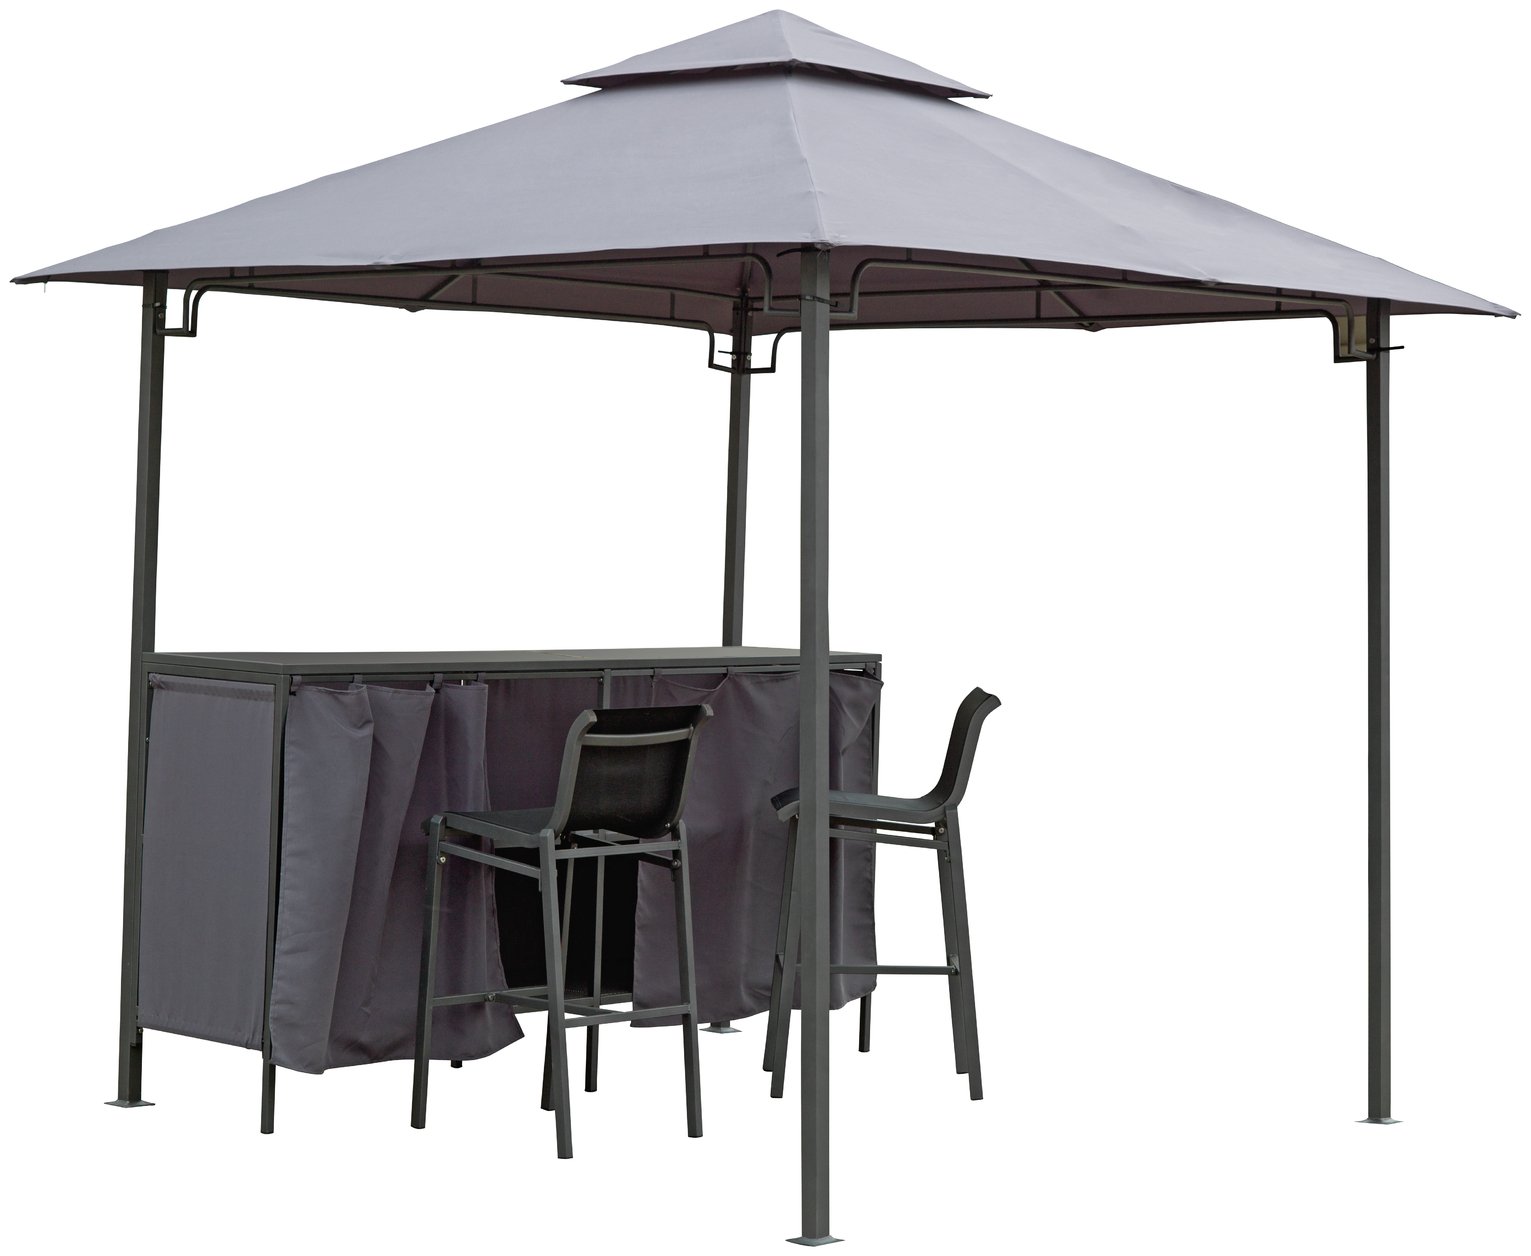 Argos Home Bar Gazebo, Table & Chairs Set